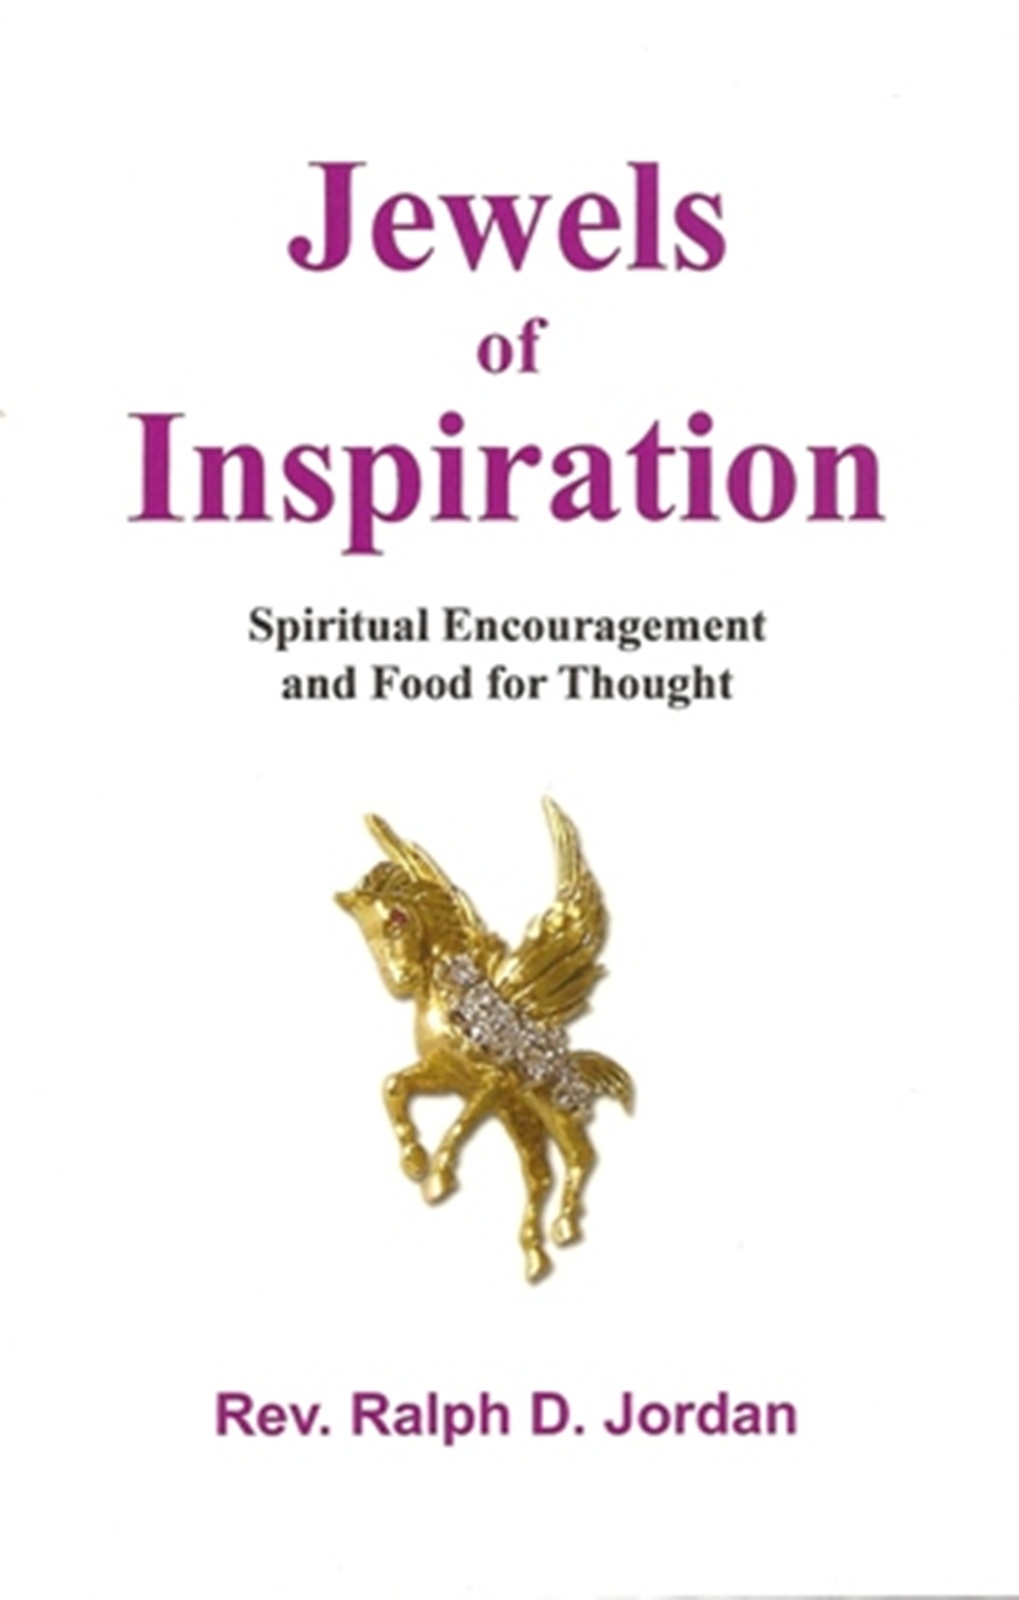 Jewels of Inspiration, Rev. Ralph D. Jordan